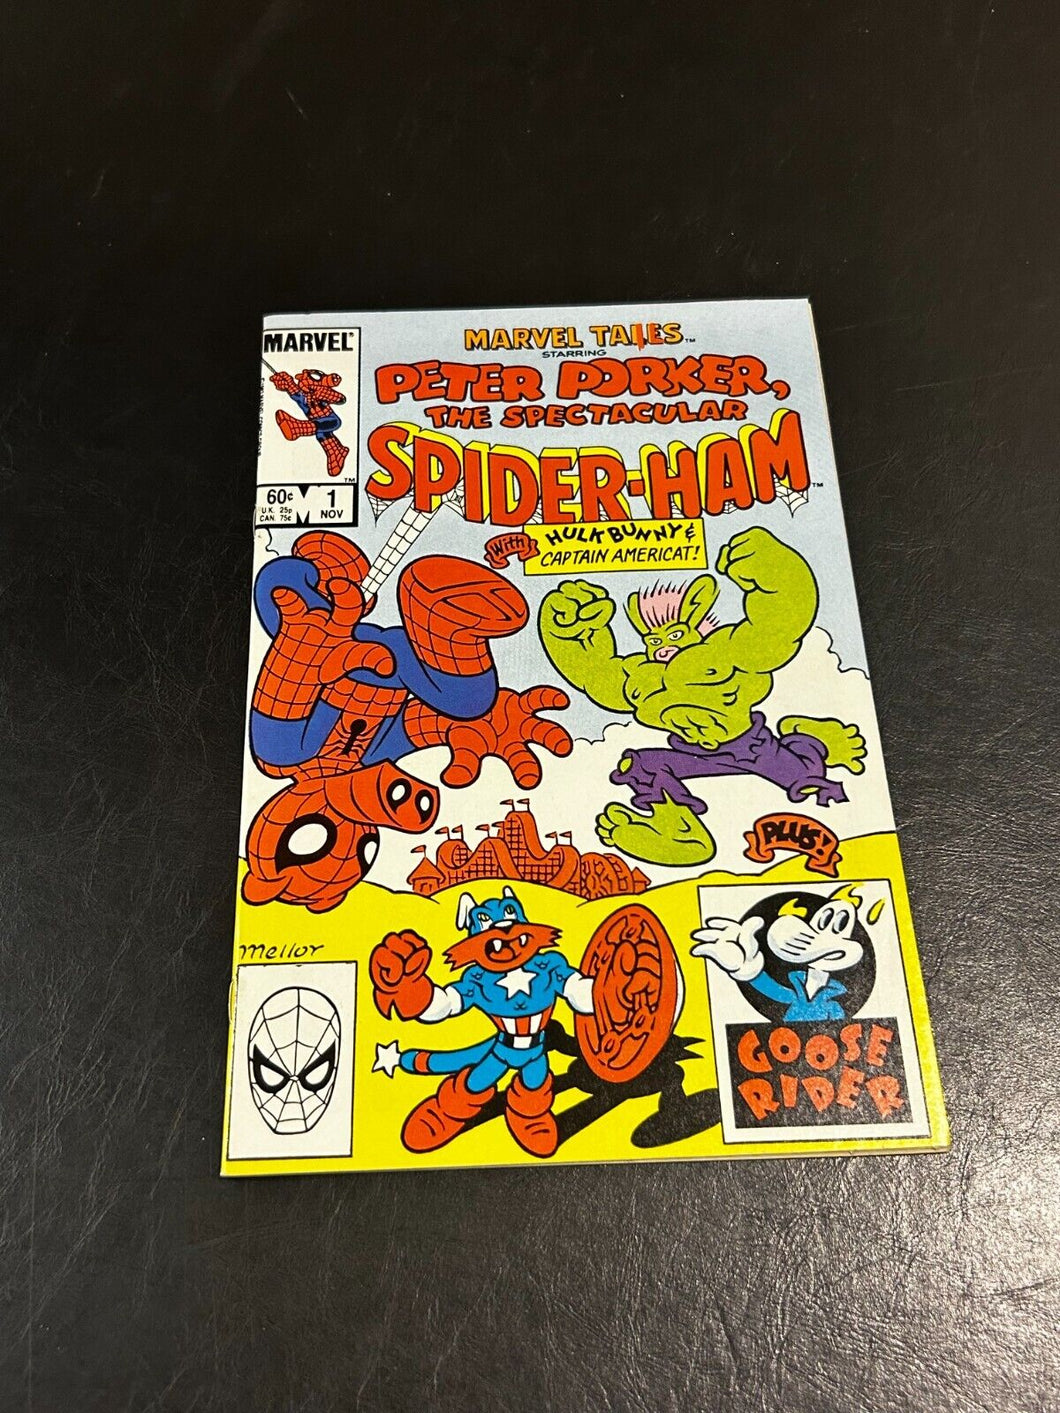 1963 Marvel Comics The Spectacular Spider-ham Issue 1, High Grade